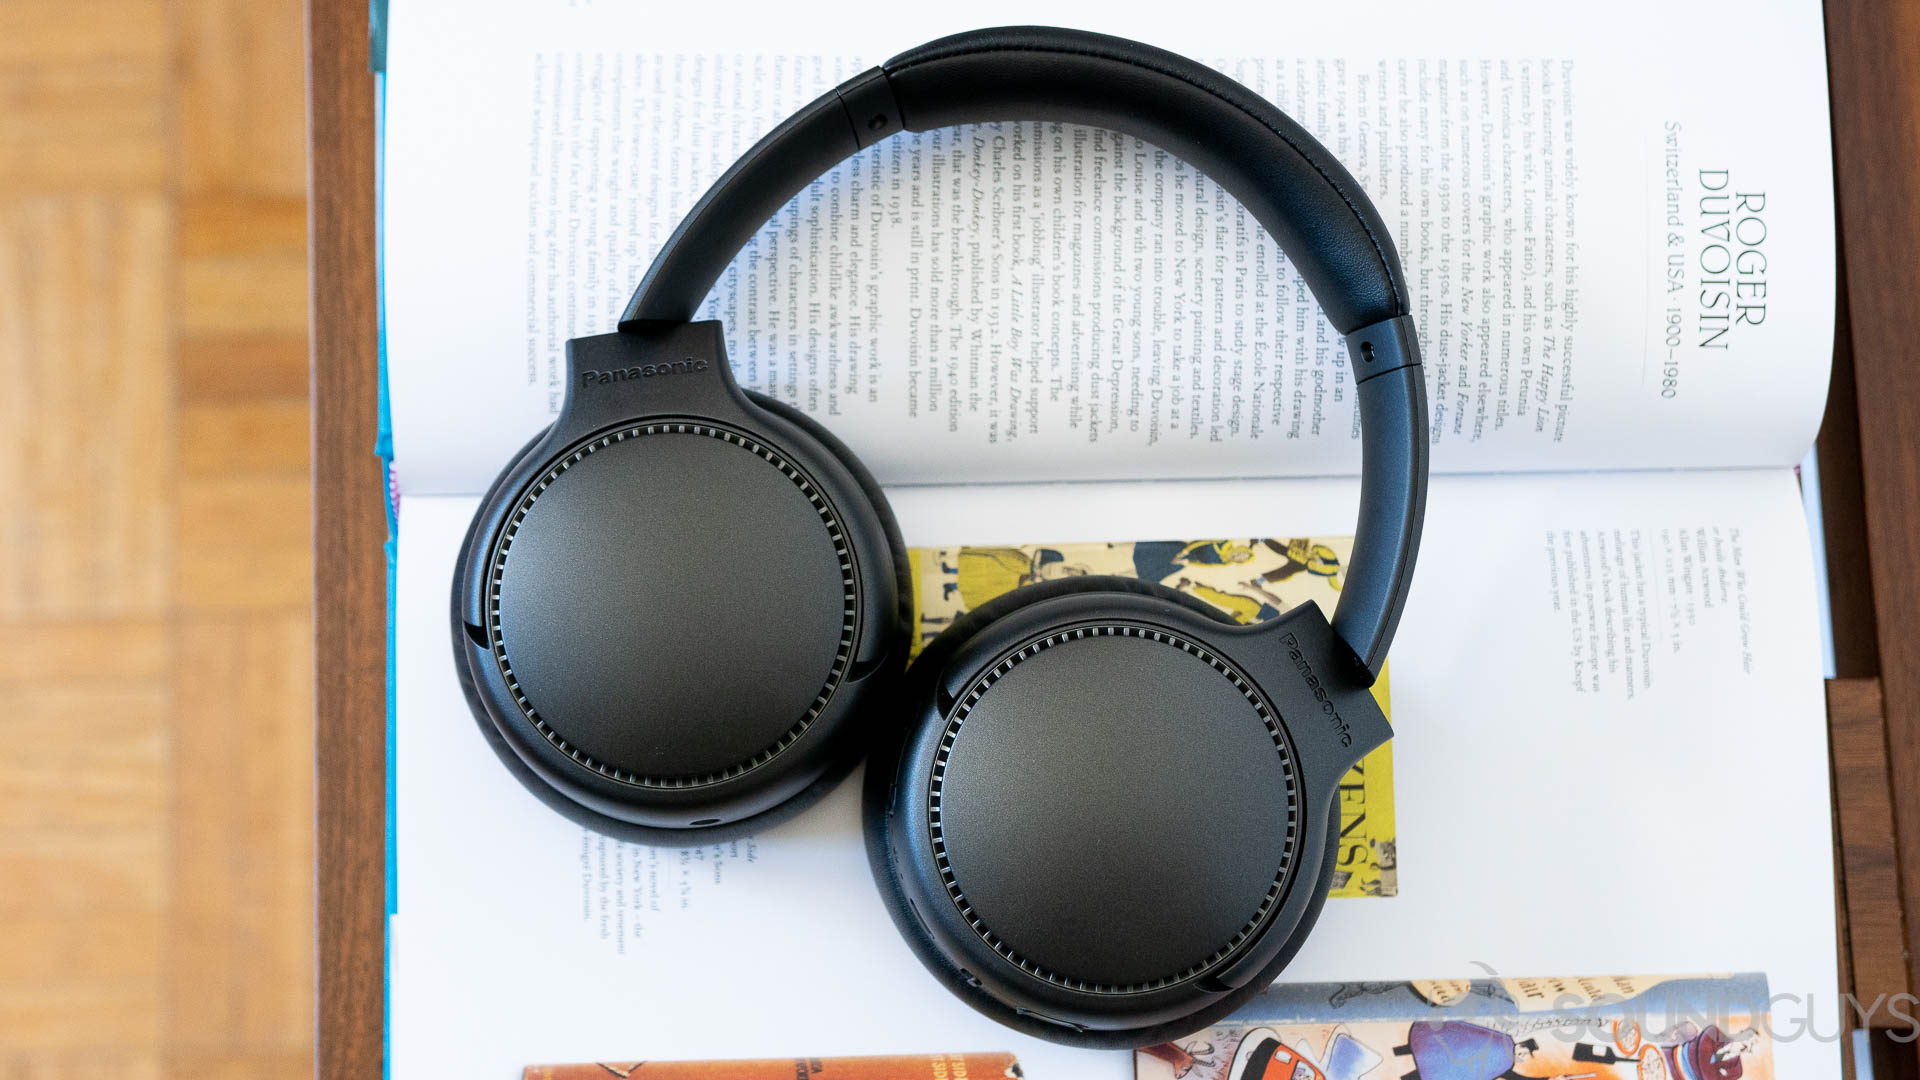 Panasonic RB-M700B headphones lying flat on an open book